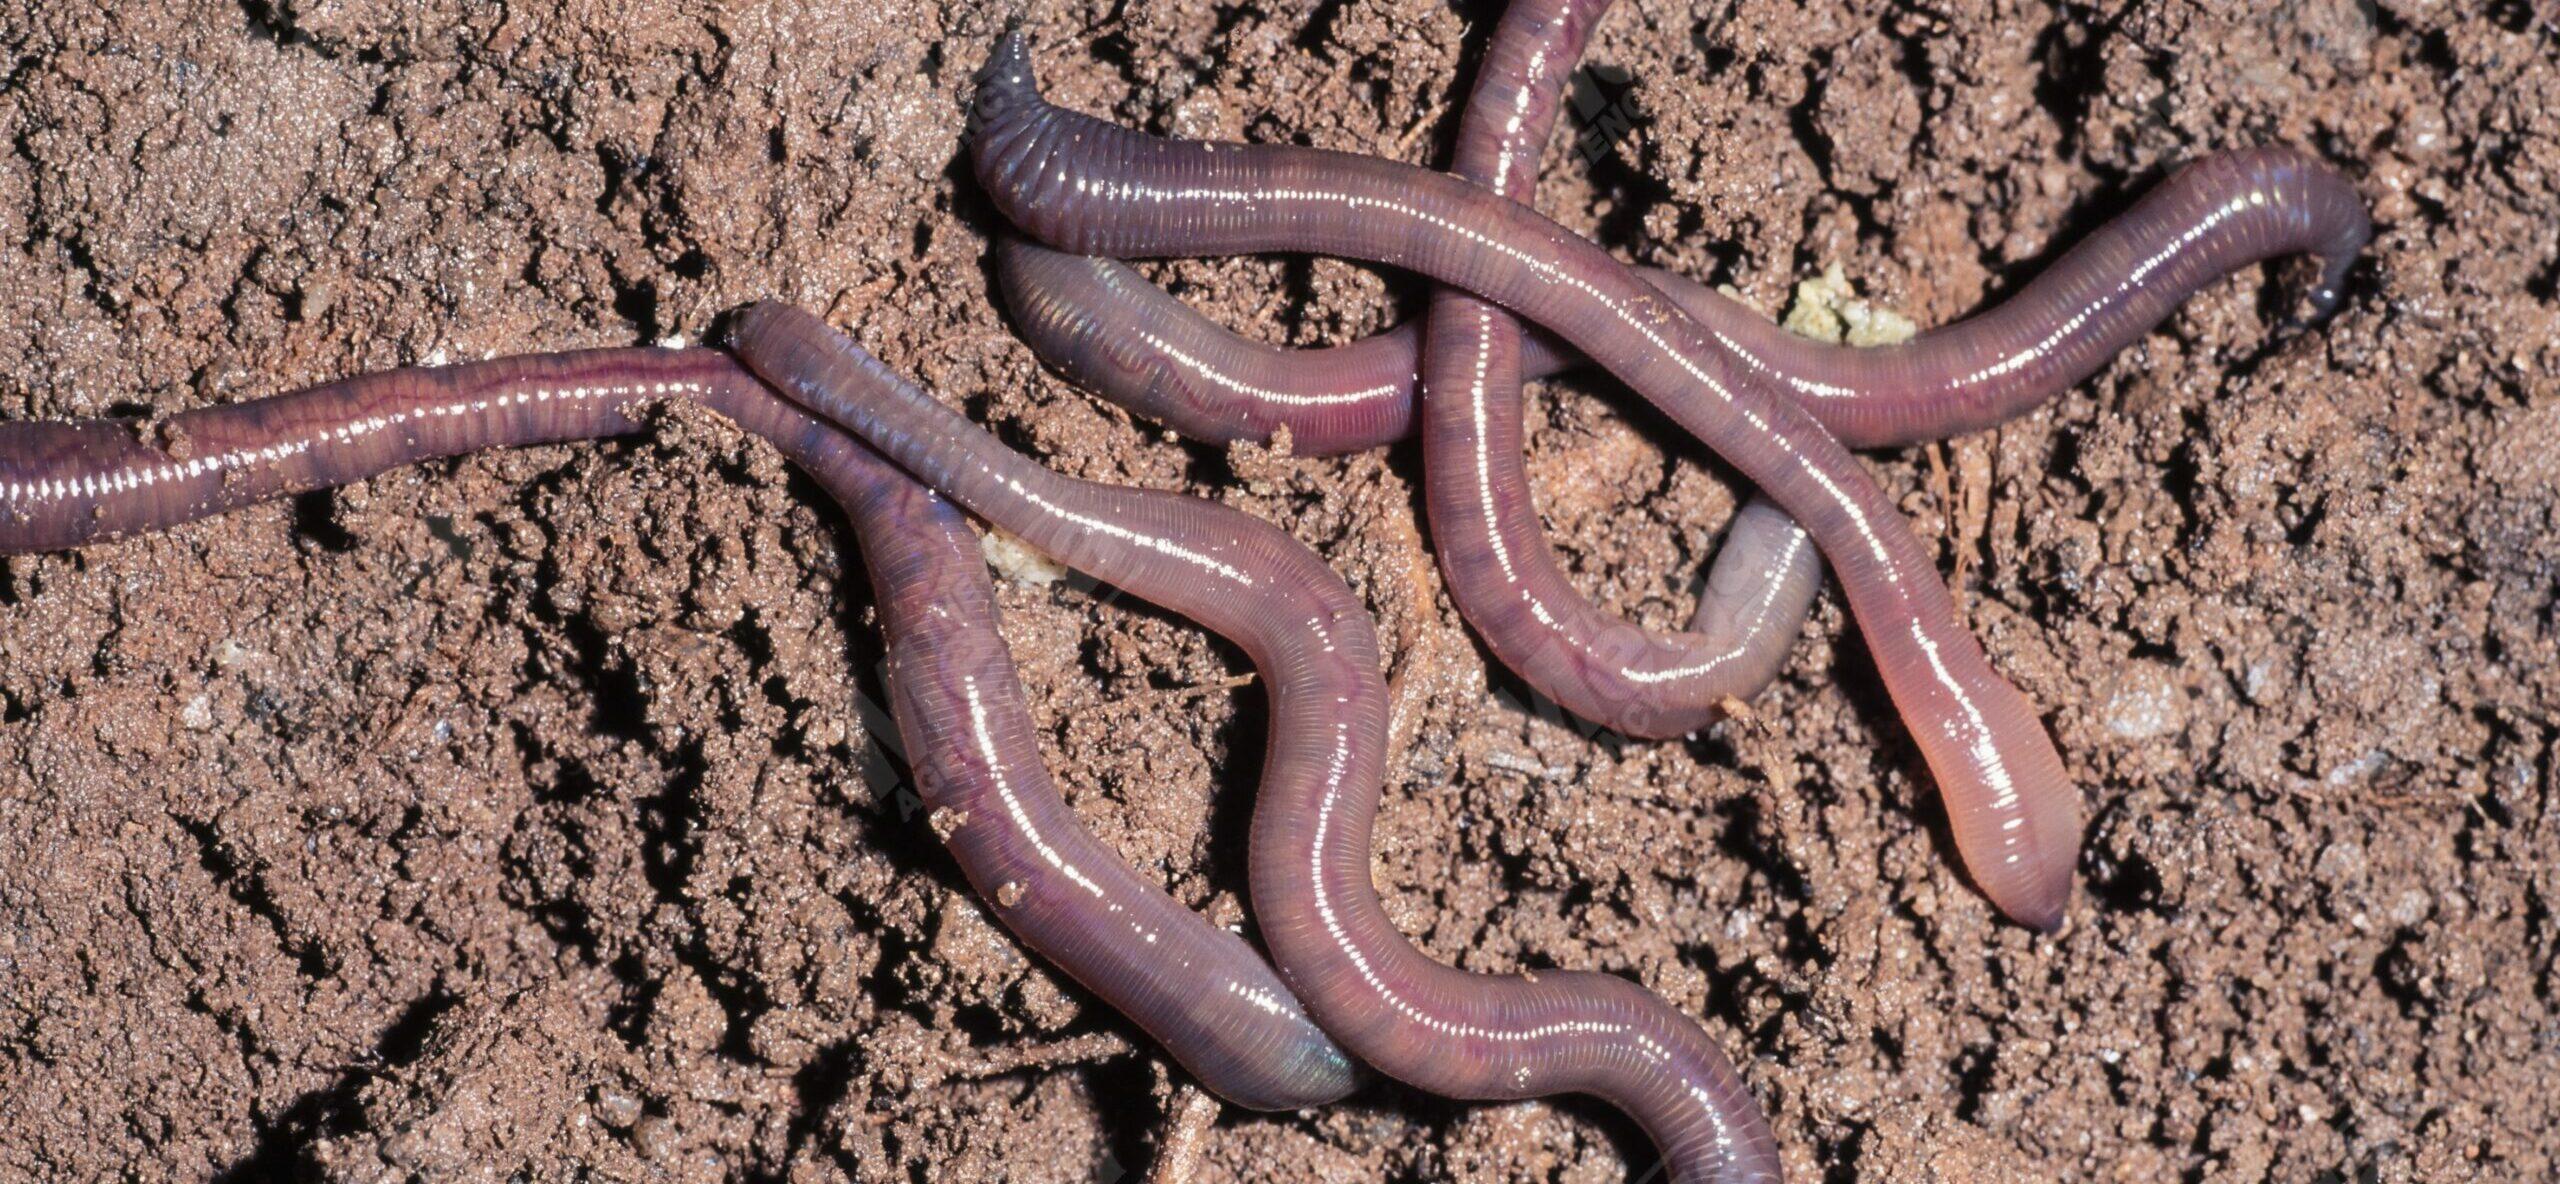 Common earthworm, Lumbricus terrestris, on wet soil surface. In its native range